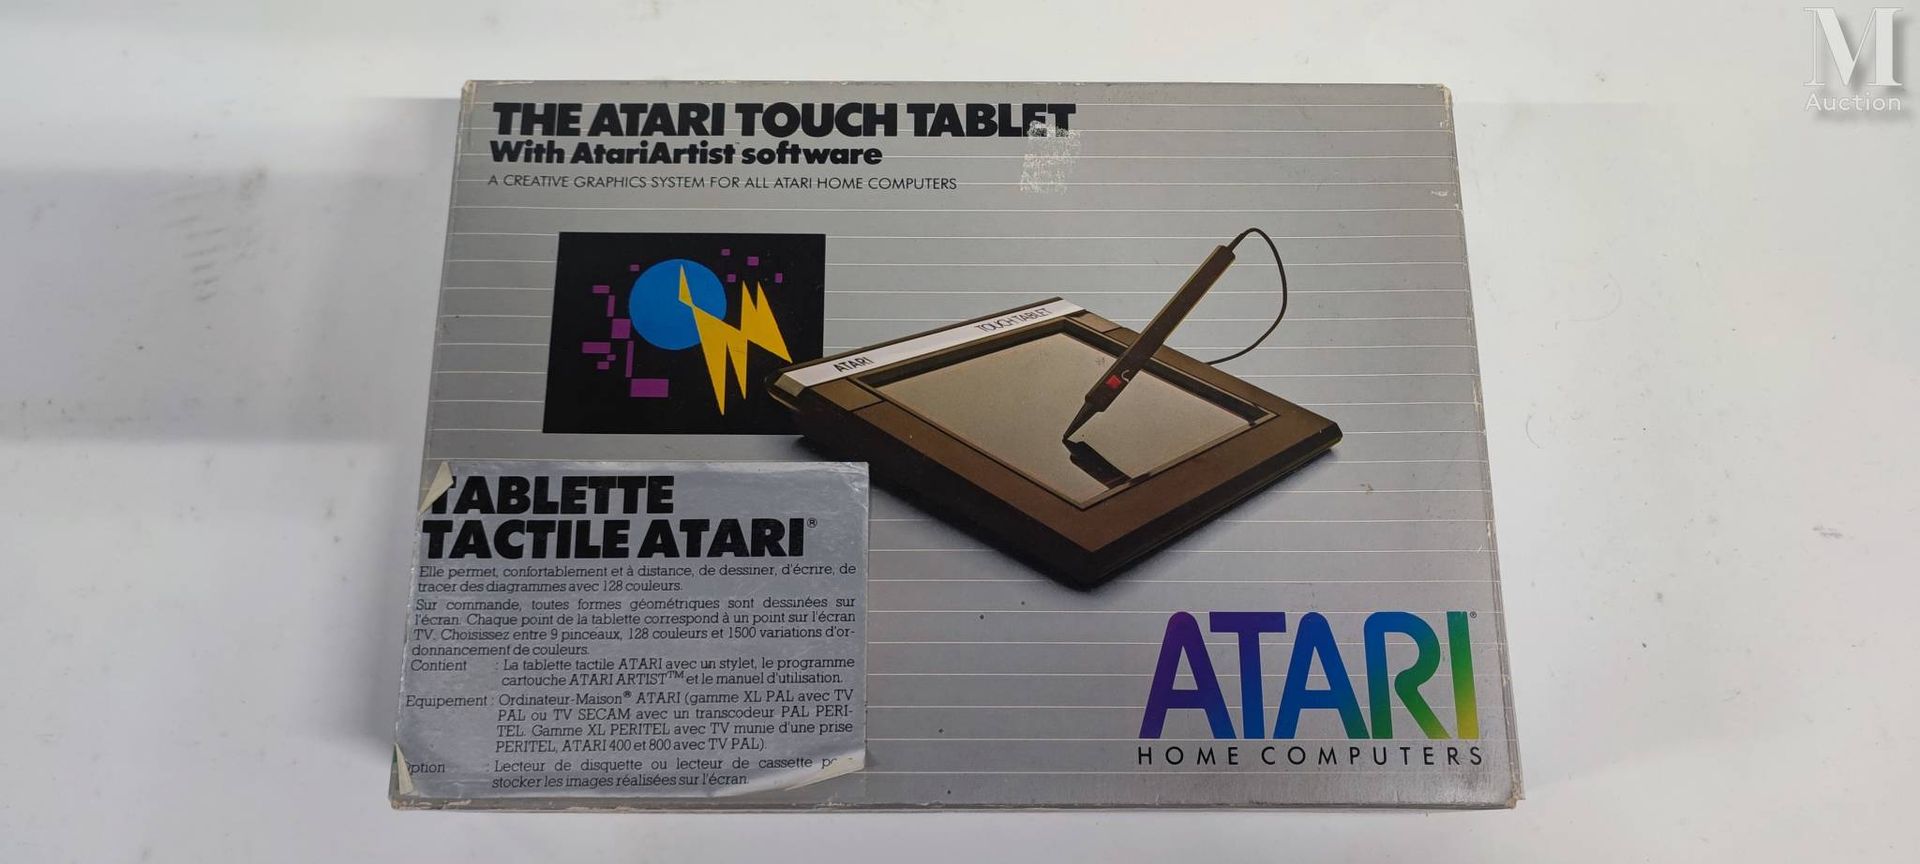 ATARI CX-77 "TOUCH TABLET" POUR ORDINATEUR ATARI - 1984 雅达利CX-77触摸板，用于雅达利电脑 - 19&hellip;